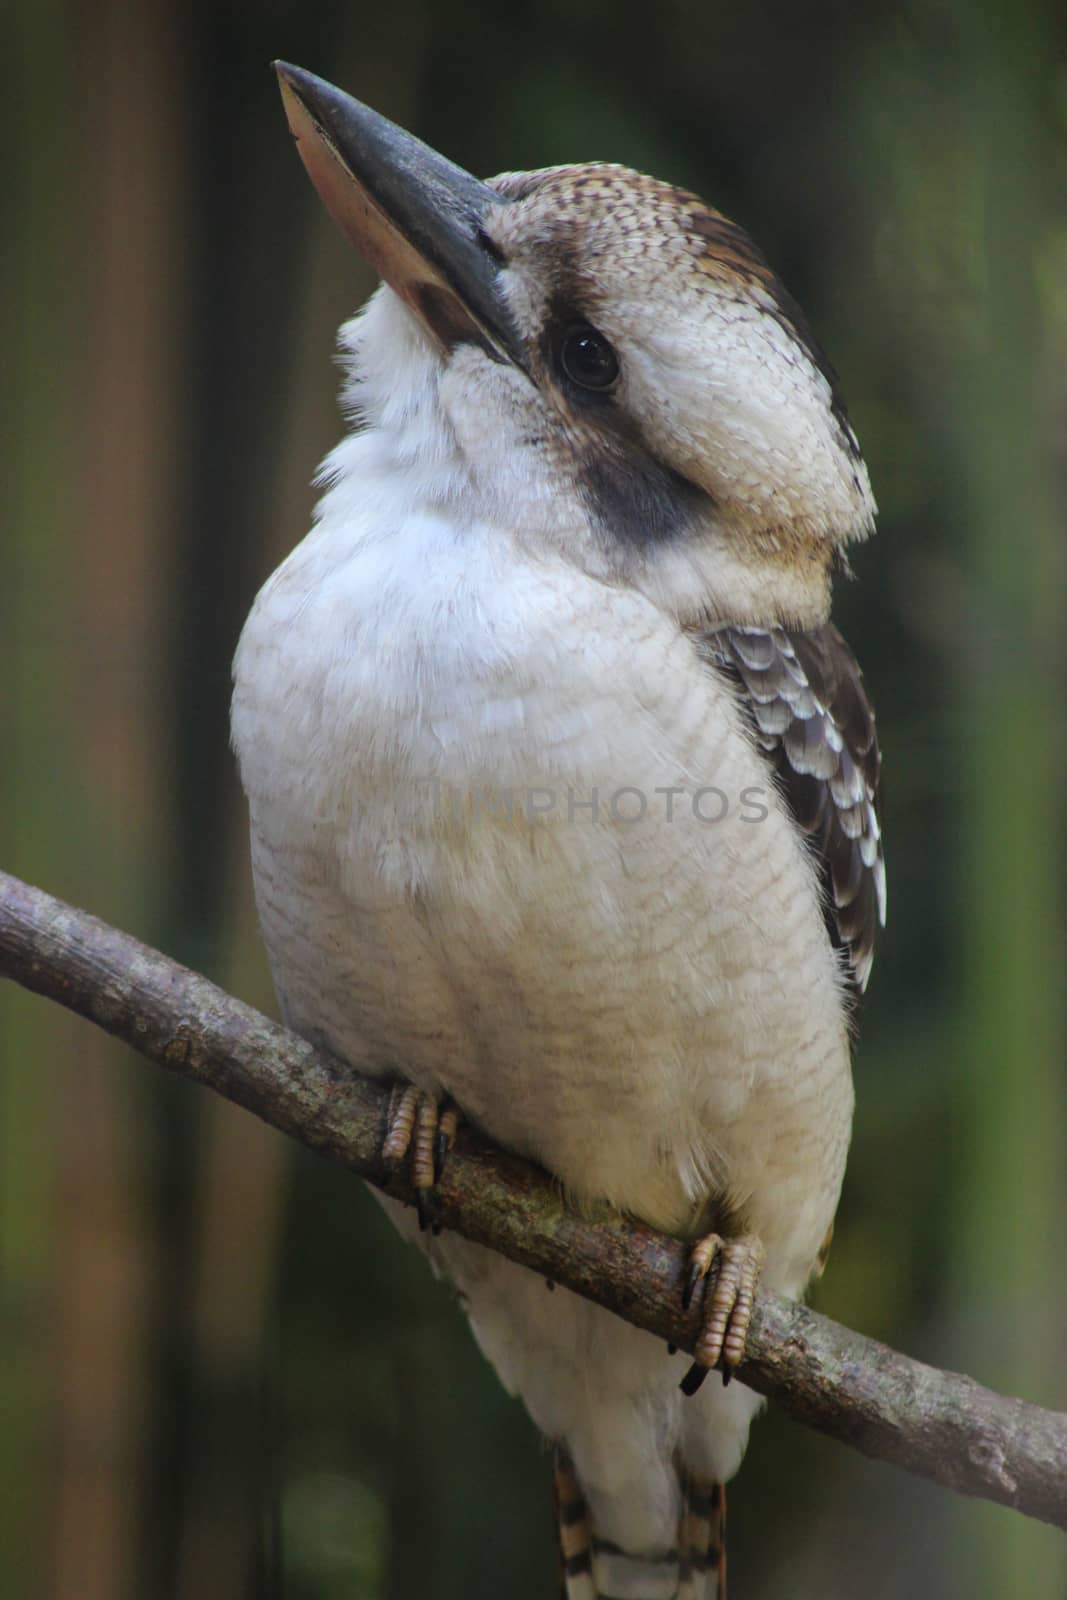 The laughing kookaburra (Dacelo novaeguineae) by bensib